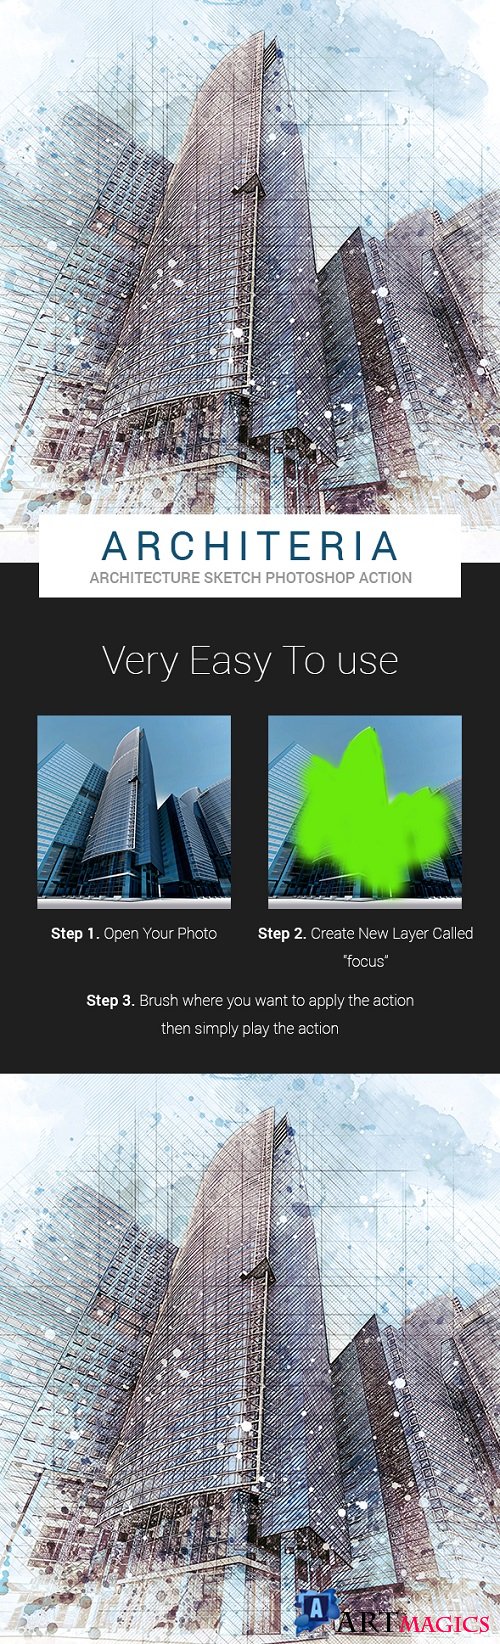 Architeria - Architecture Sketch Photoshop Action 21433278